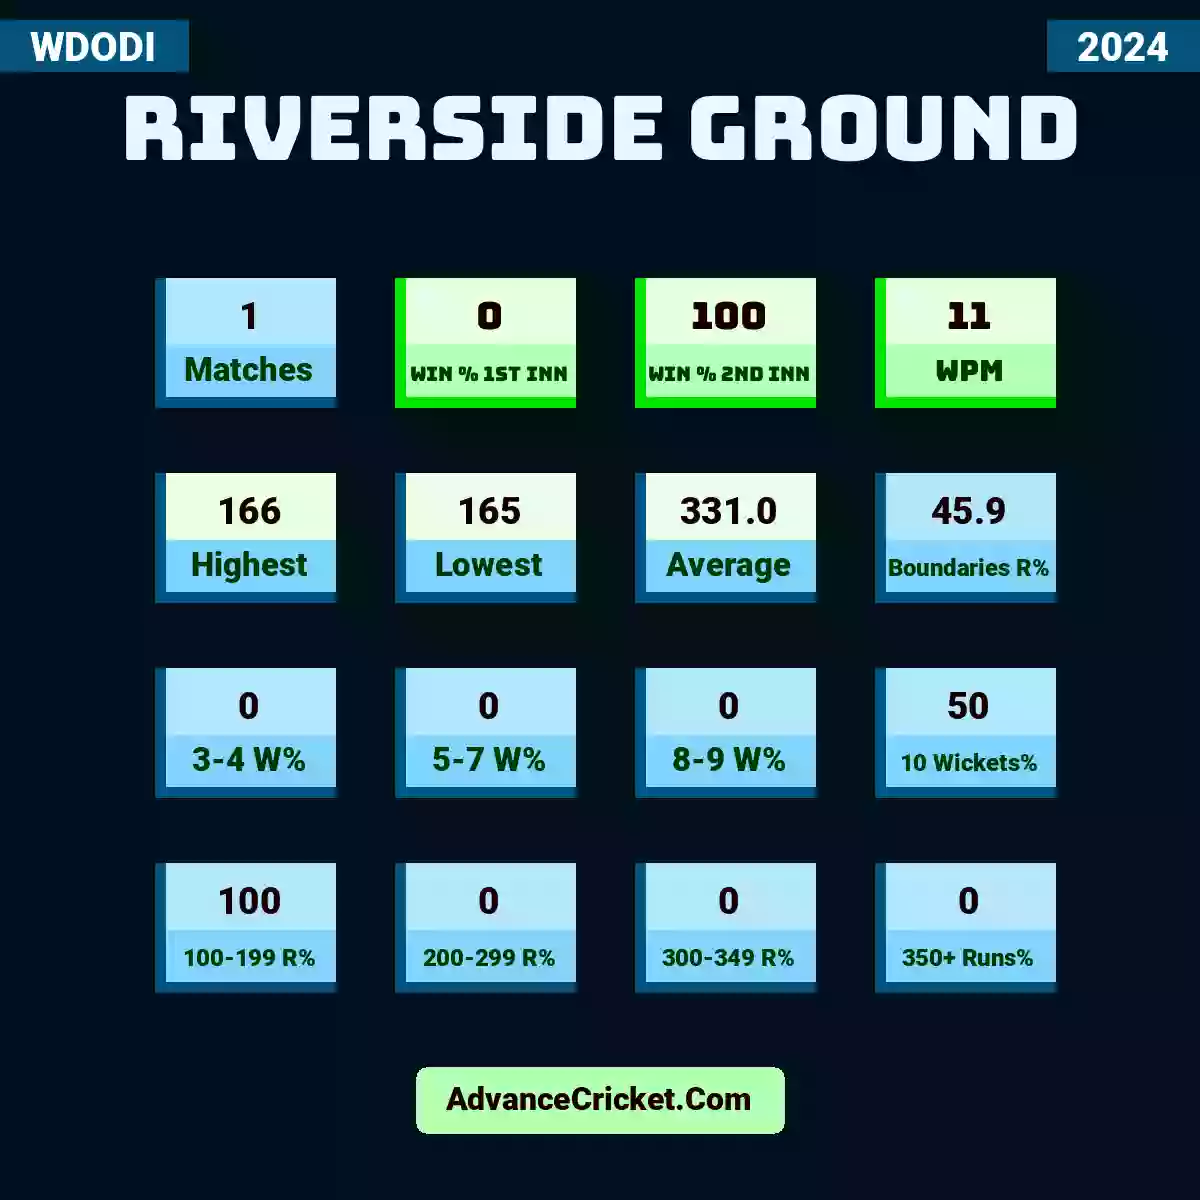 Image showing Riverside Ground WDODI 2024 with Matches: 1, Win % 1st Inn: 0, Win % 2nd Inn: 100, WPM: 11, Highest: 166, Lowest: 165, Average: 331.0, Boundaries R%: 45.9, 3-4 W%: 0, 5-7 W%: 0, 8-9 W%: 0, 10 Wickets%: 50, 100-199 R%: 100, 200-299 R%: 0, 300-349 R%: 0, 350+ Runs%: 0.